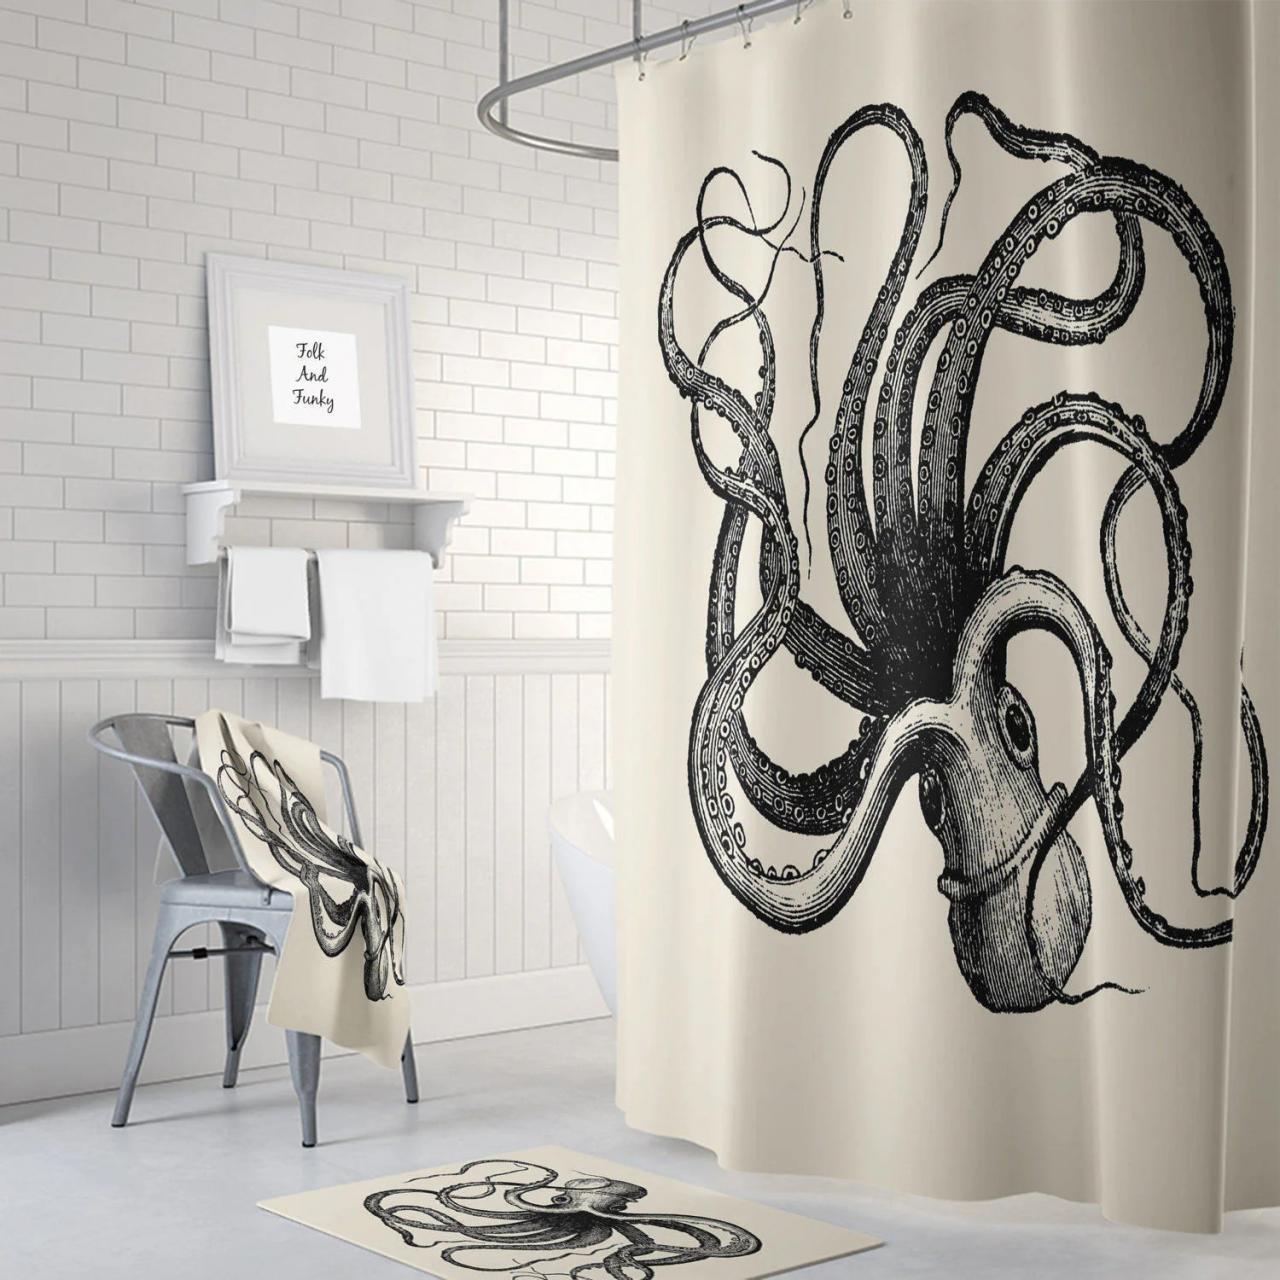 Octopus Bathroom Decor